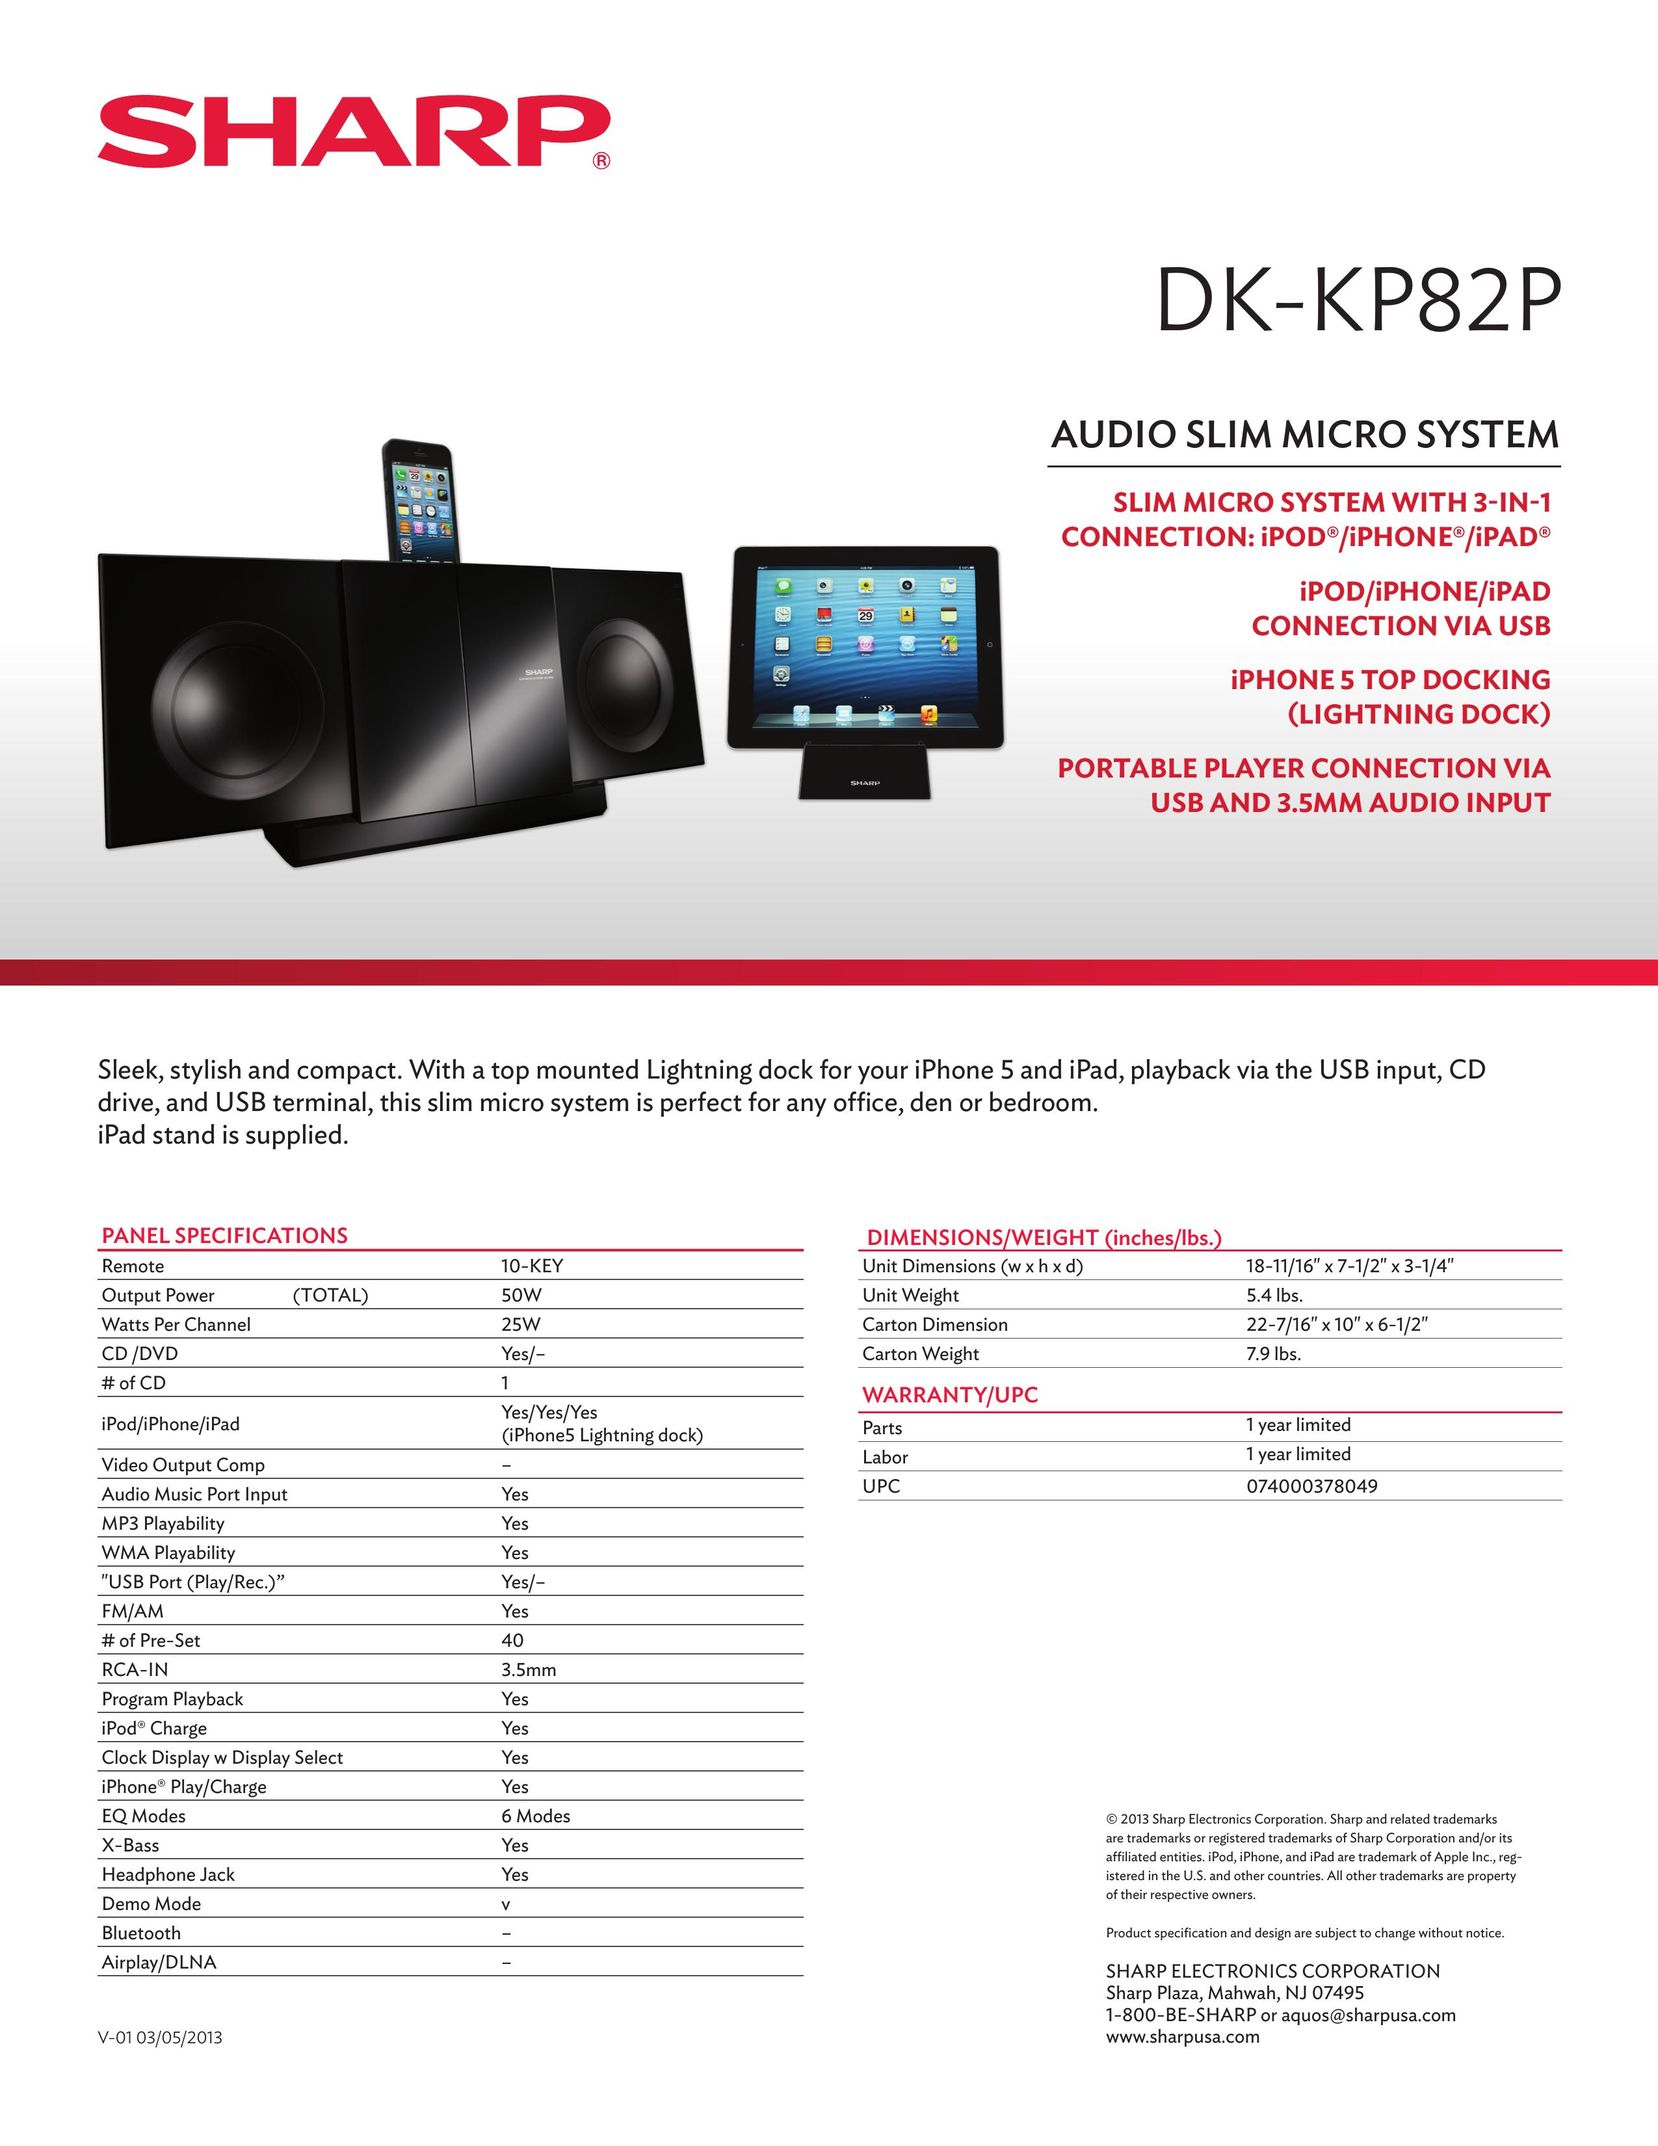 Sharp DKKP82P MP3 Docking Station User Manual